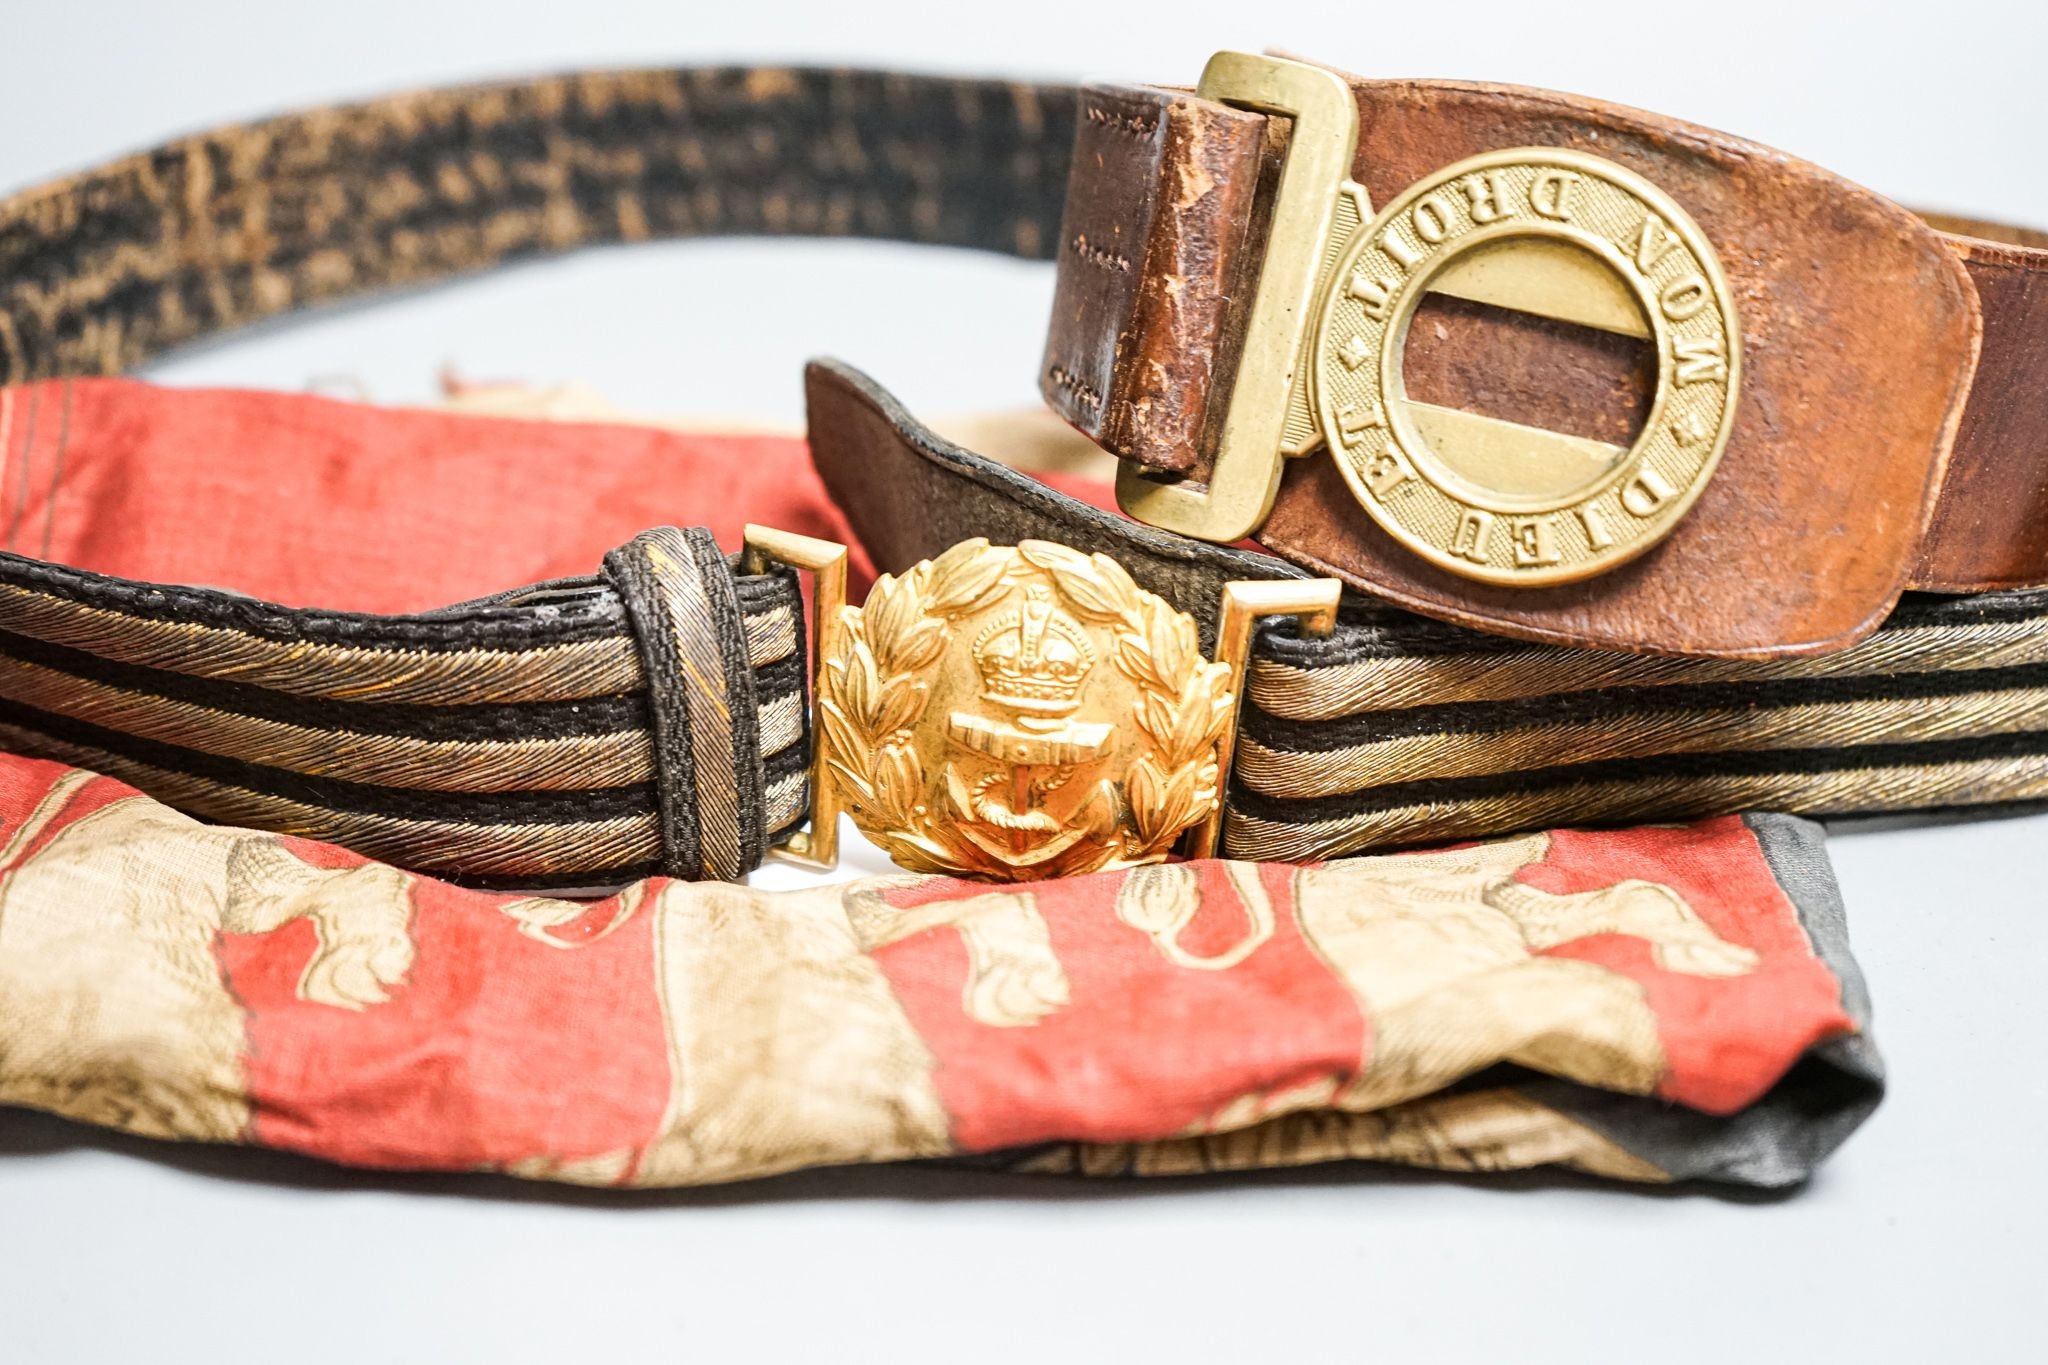 A Royal Naval gilt brass mounted officers belt and an Edwardian Dieu et mon droit belt and a Victorian printed flag